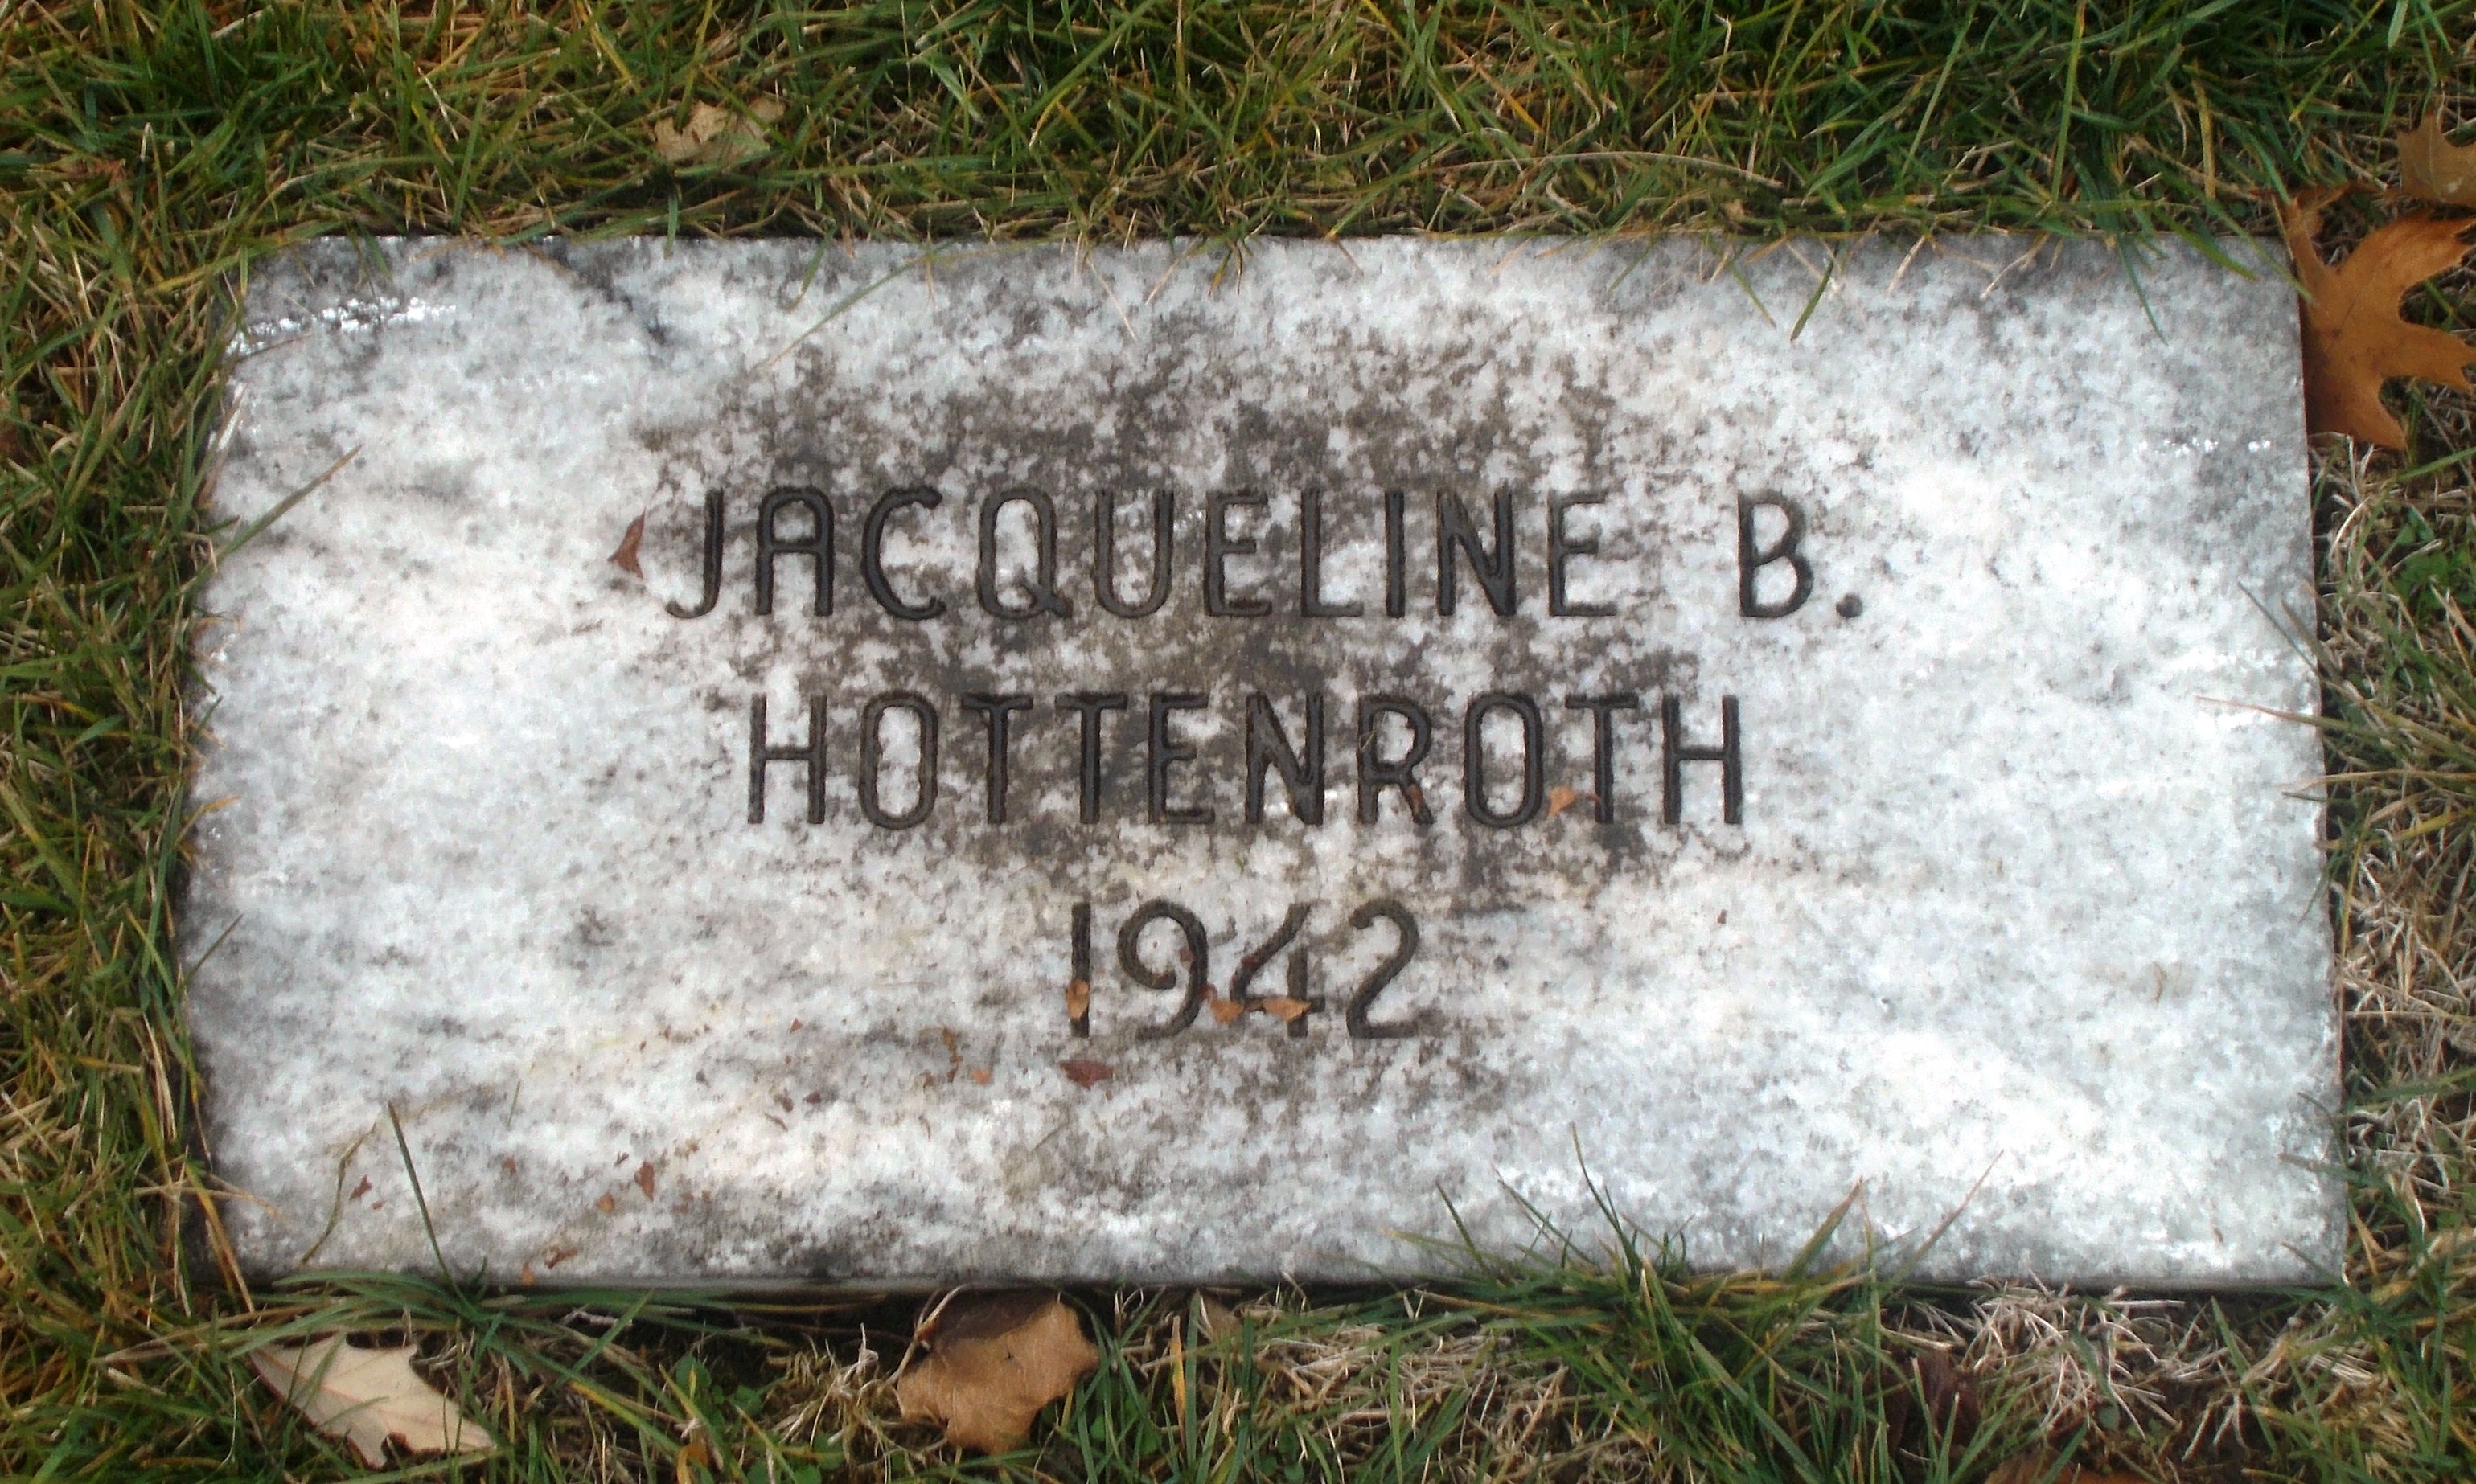 Jacqueline B Hottenroth